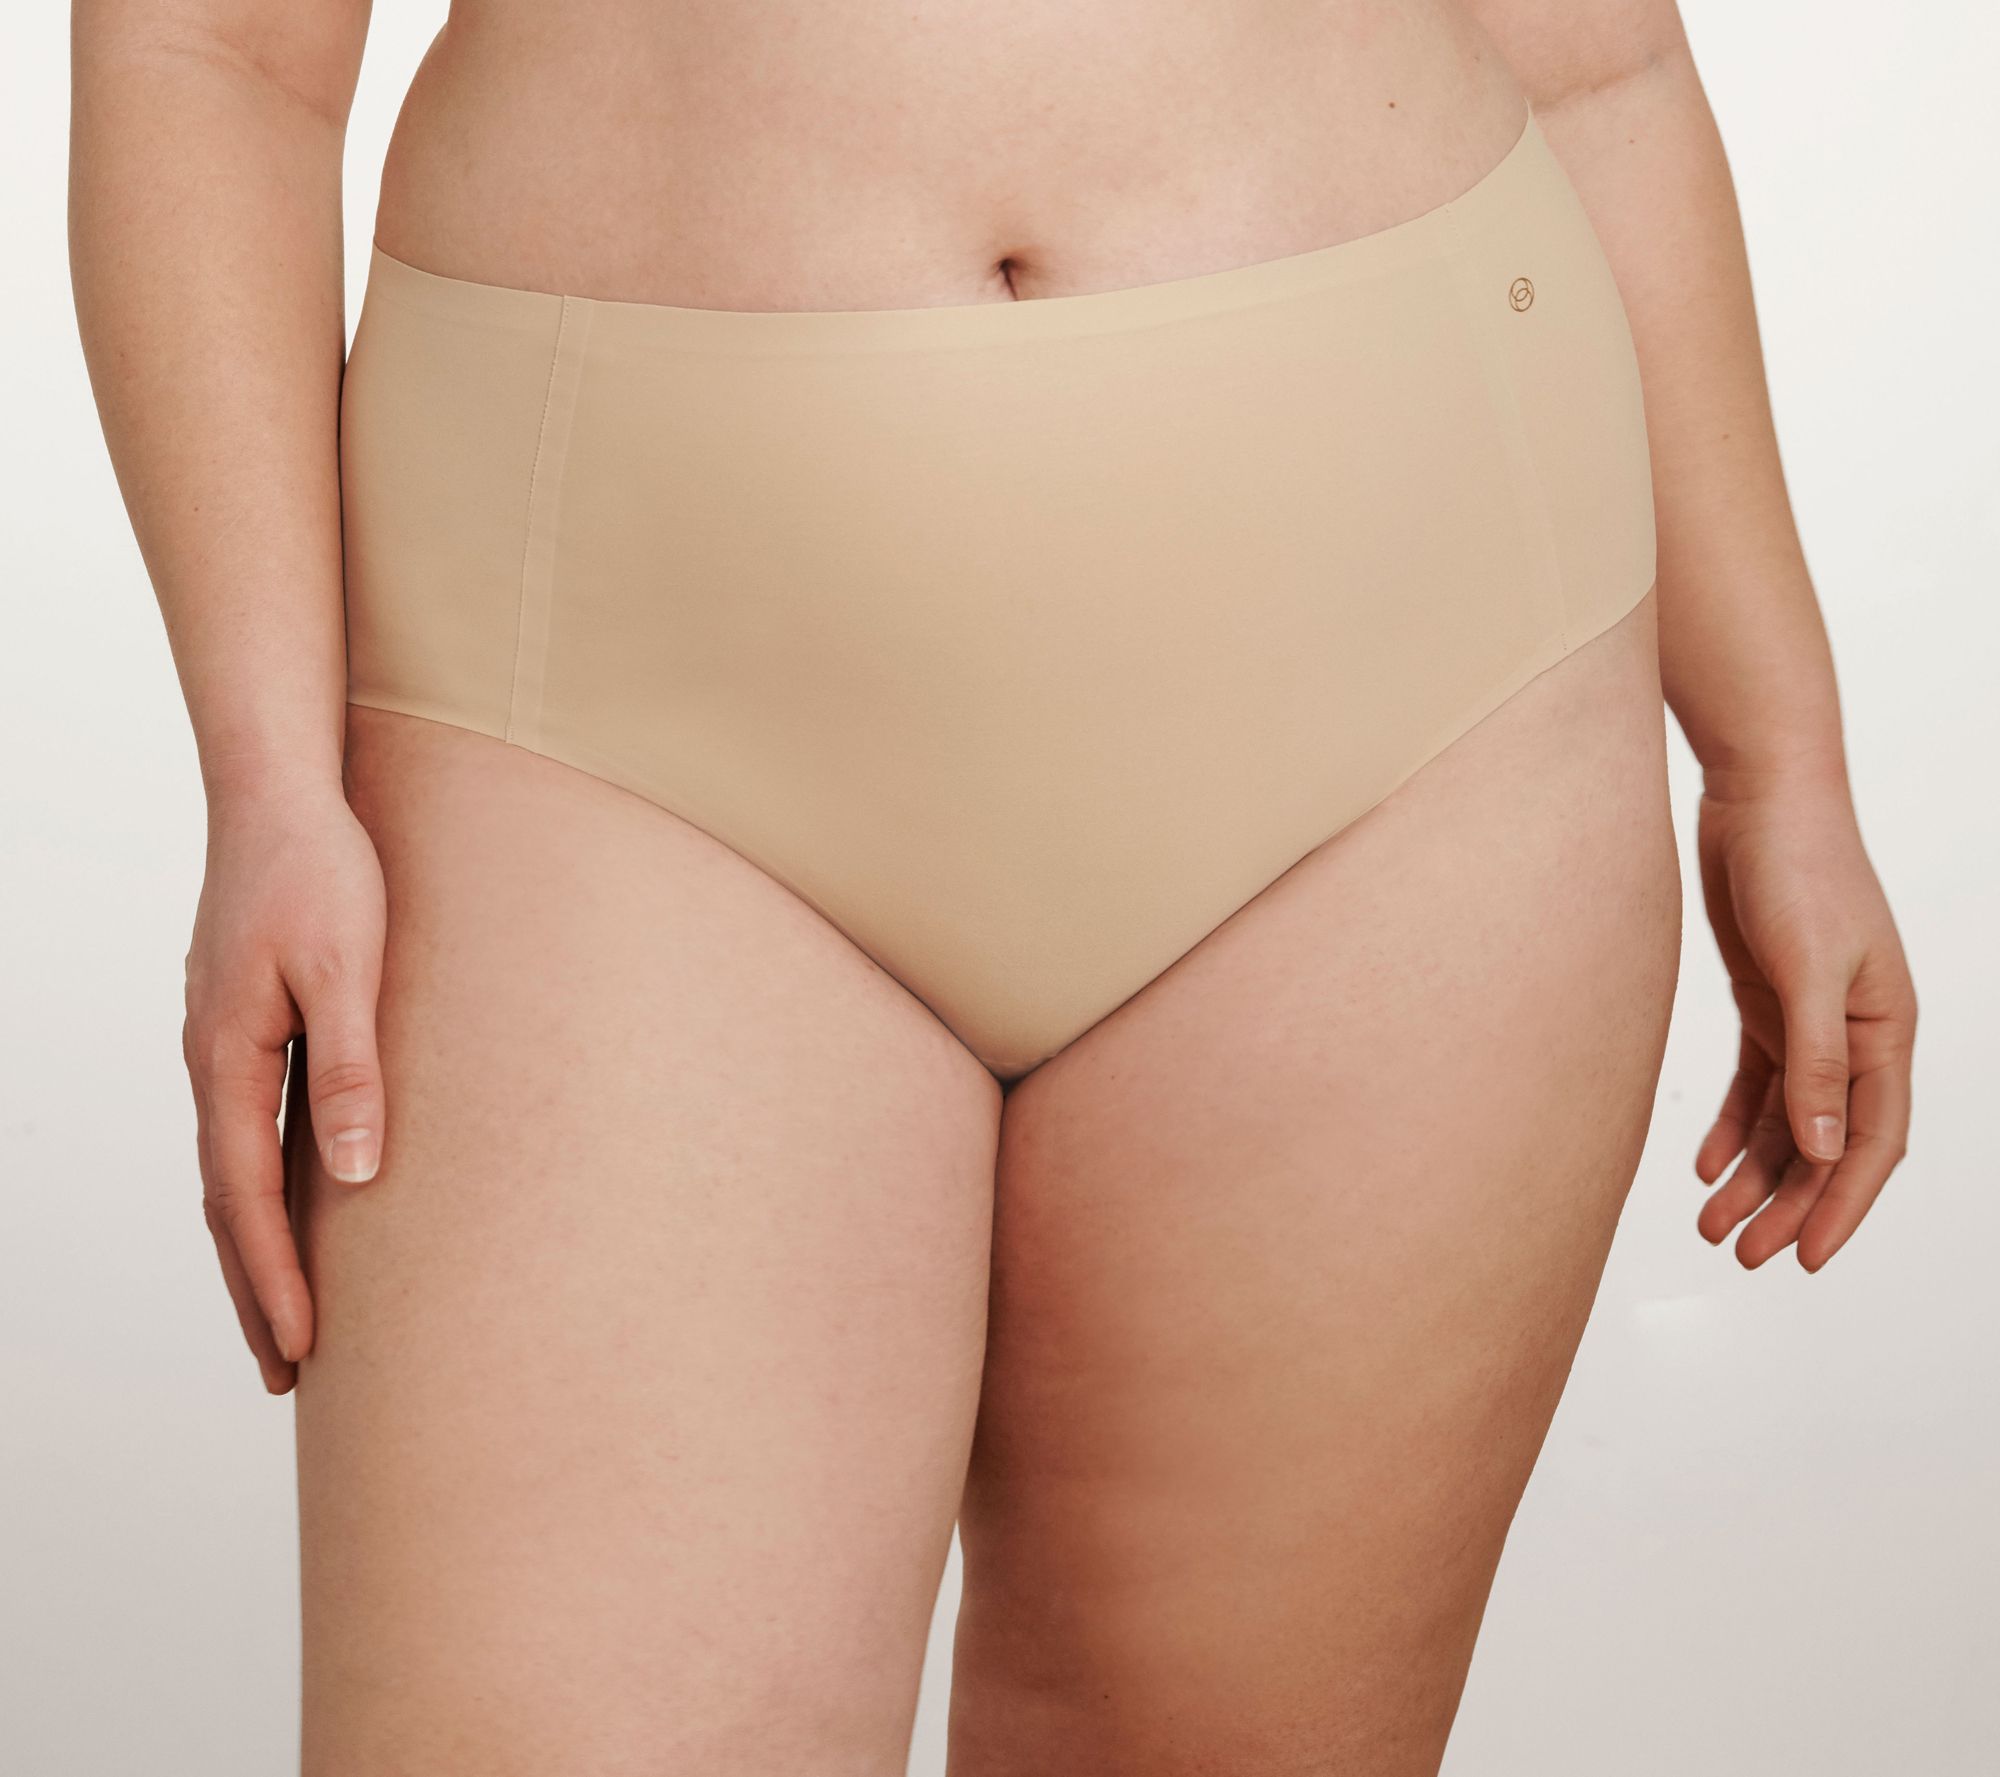 Mrat Seamless Panties Ladies Soft Full Briefs Men's Underwear Swim